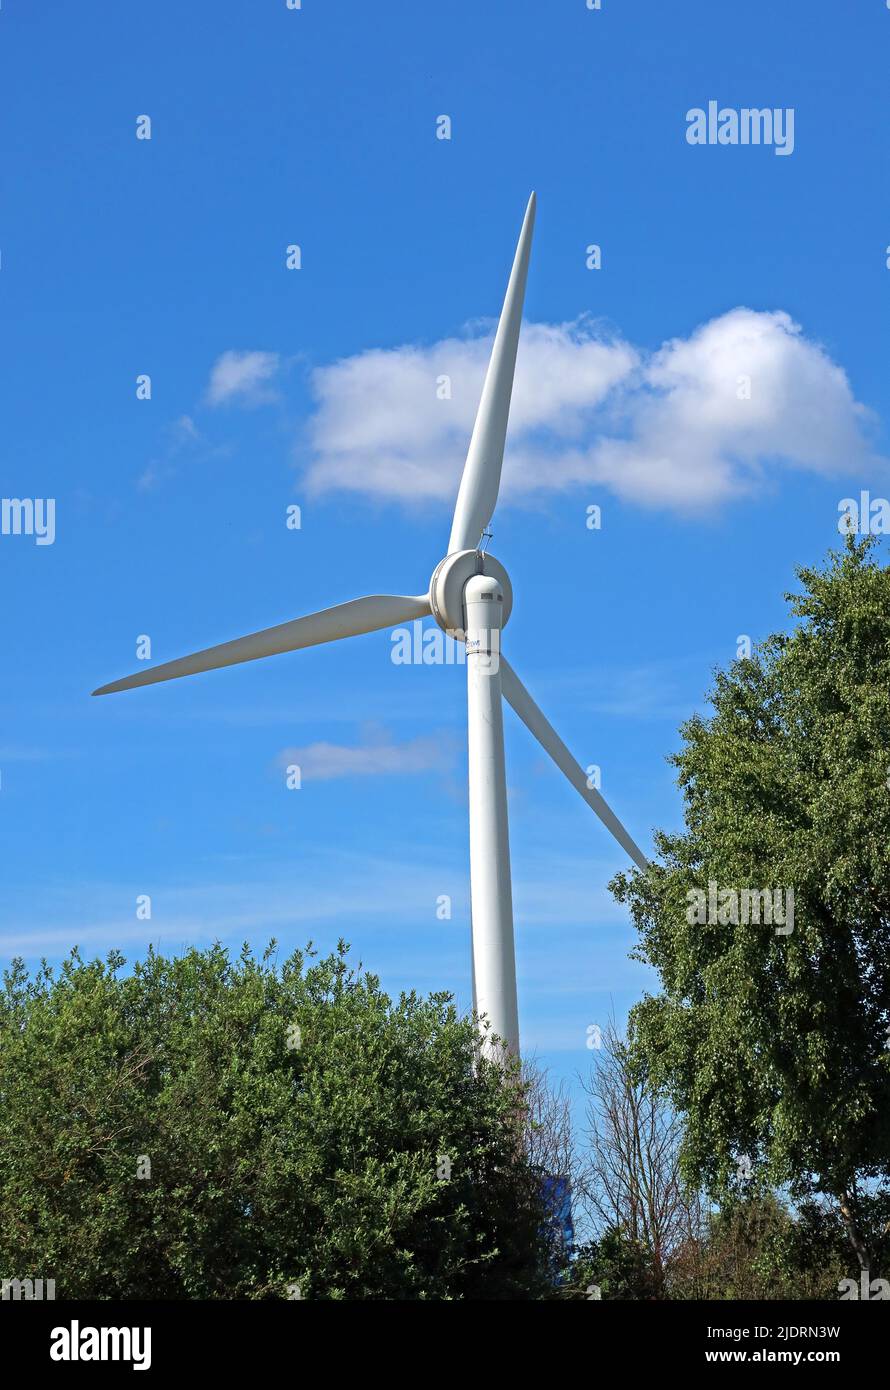 EWT single wind turbine,Gemini,M62,retail park,Warrington,built in Hoogland, Netherlands,generating clean electricity Stock Photo